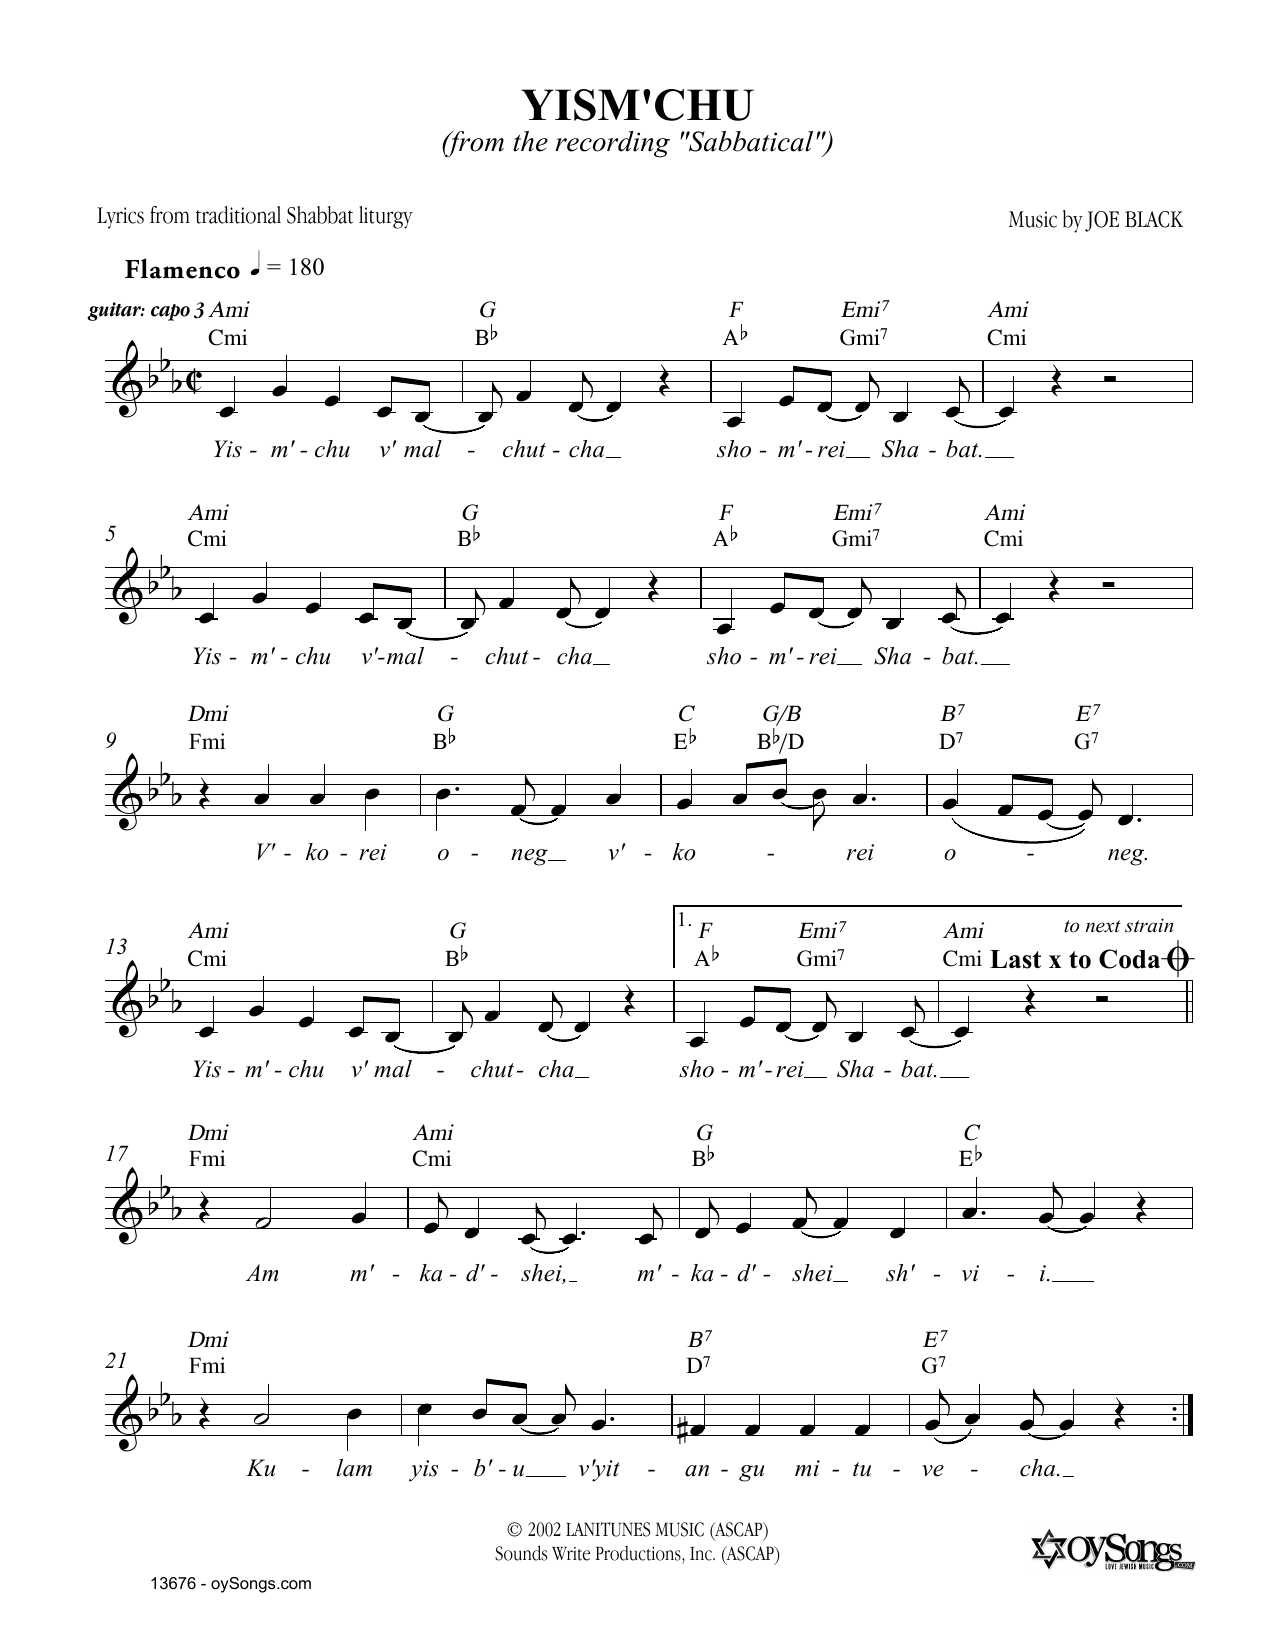 Joe Black Yismechu Sheet Music Notes & Chords for Melody Line, Lyrics & Chords - Download or Print PDF